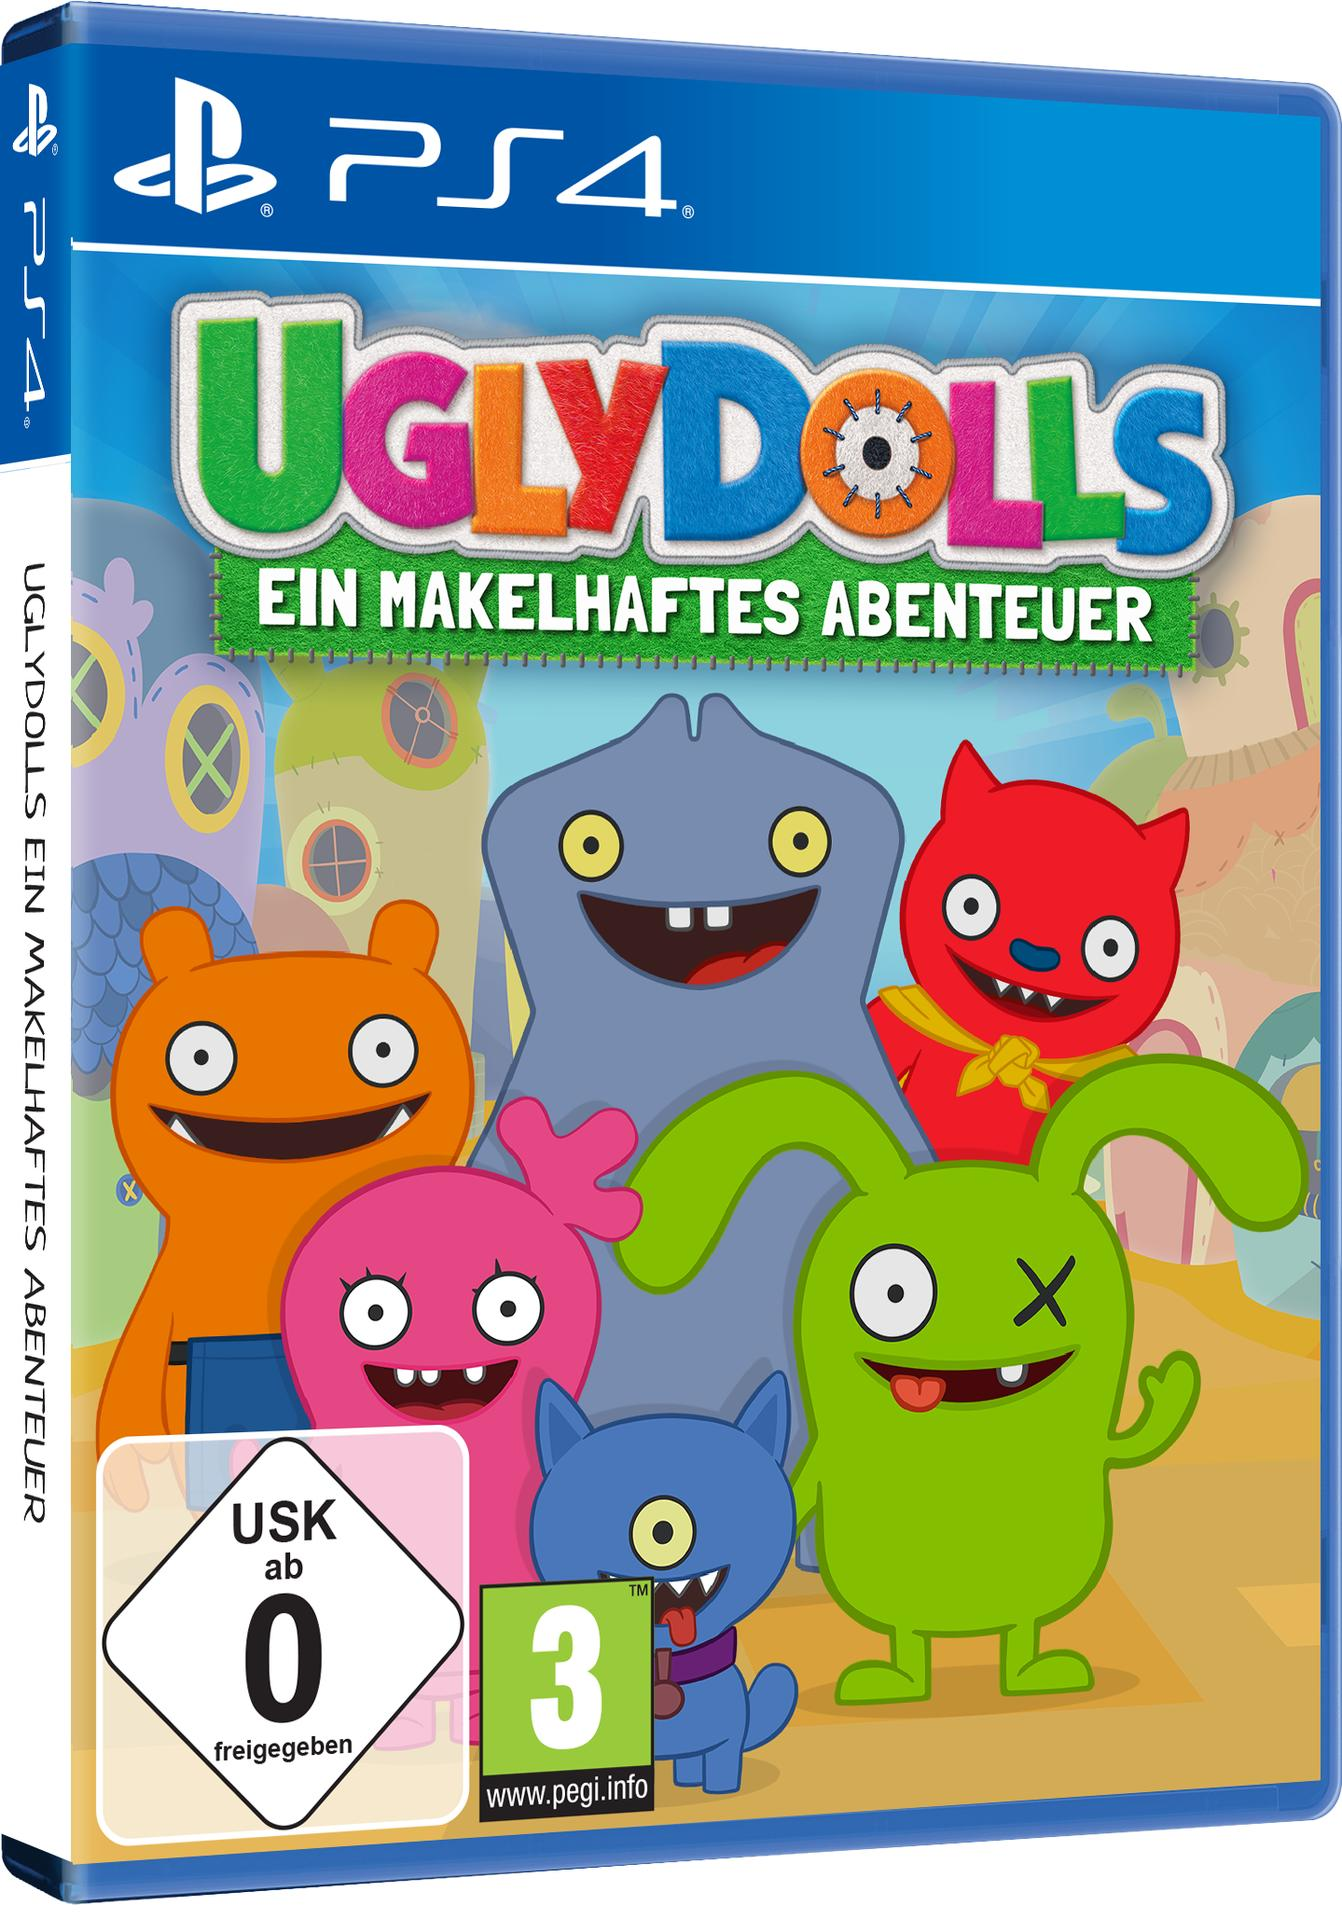 UglyDolls: Ein Abenteuer 4] [PlayStation - makelhaftes